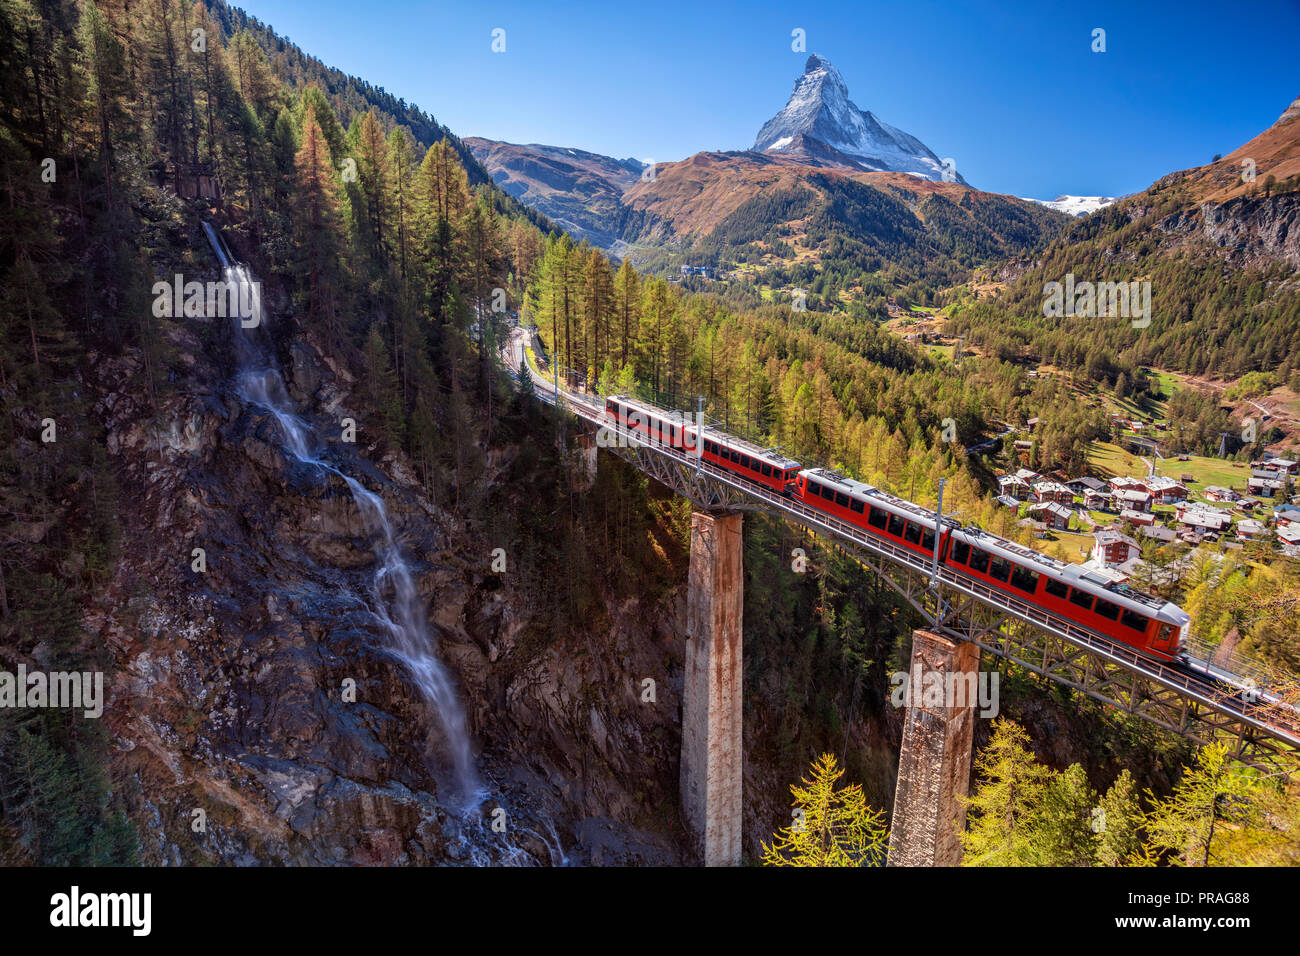 Zermatt, Switzerland. Image of Swiss Alps with Gornergrad tourist train, waterfall and Matterhorn in Valais region. Stock Photo